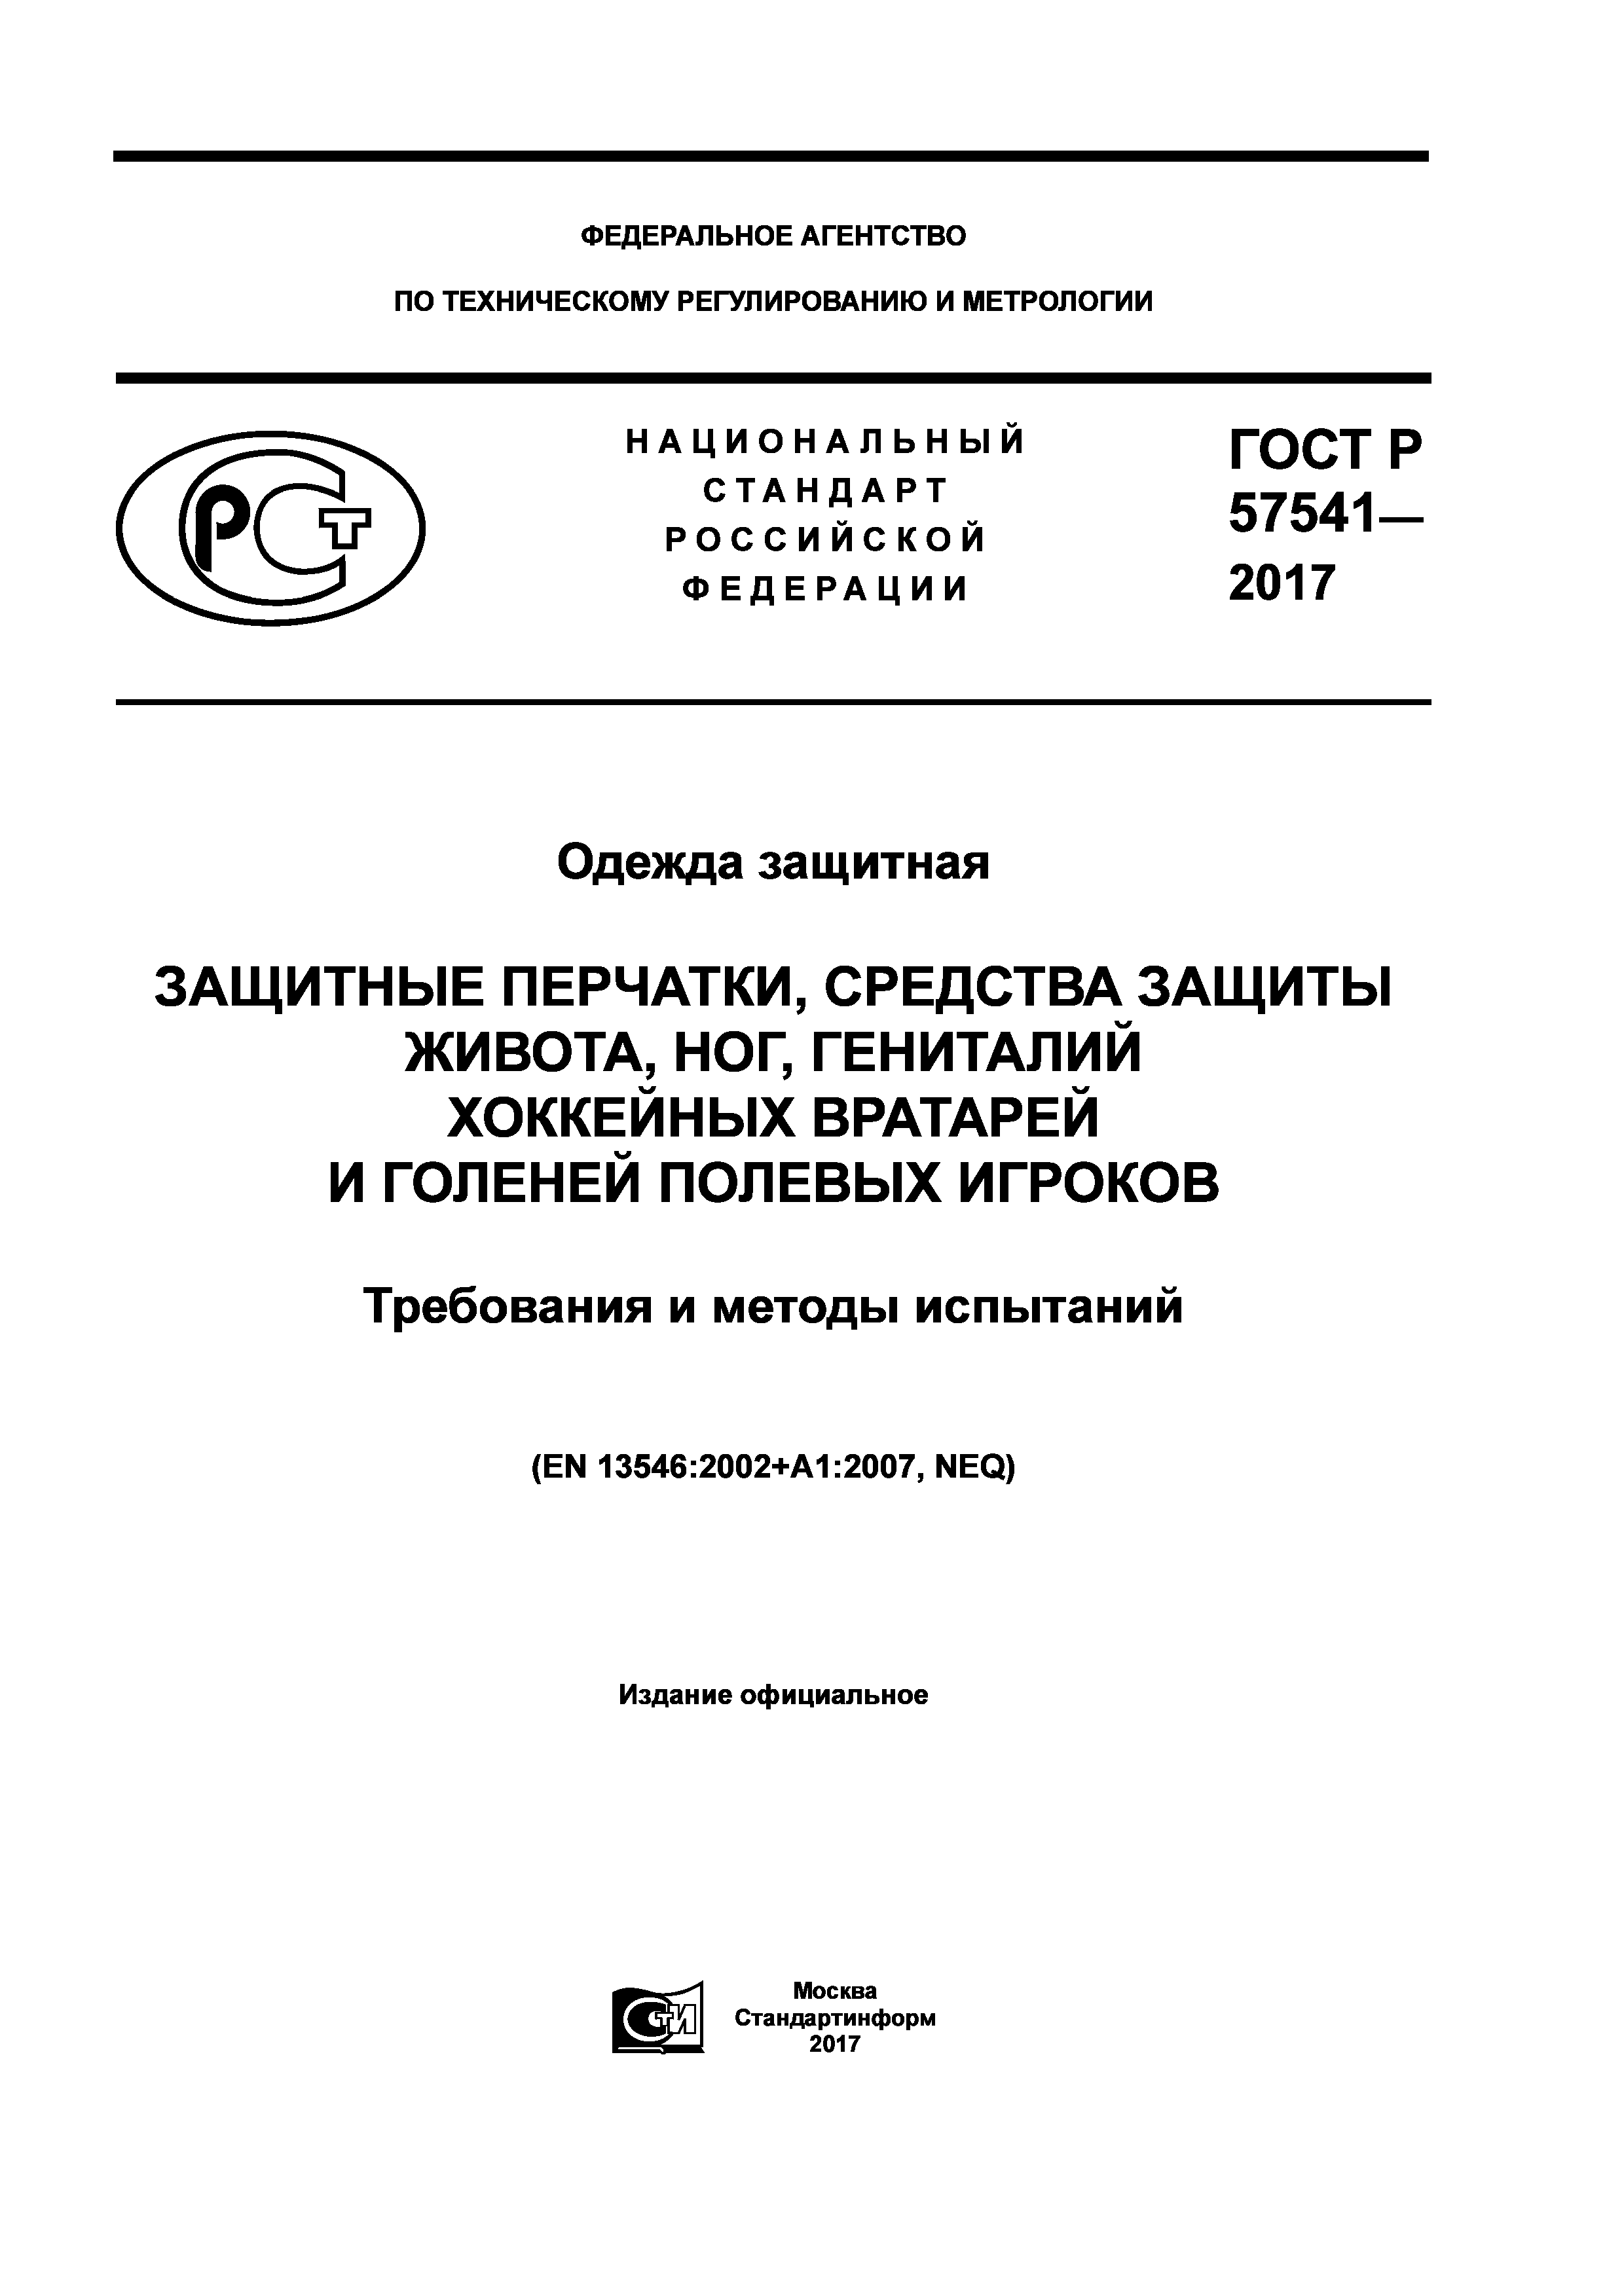 ГОСТ Р 57541-2017